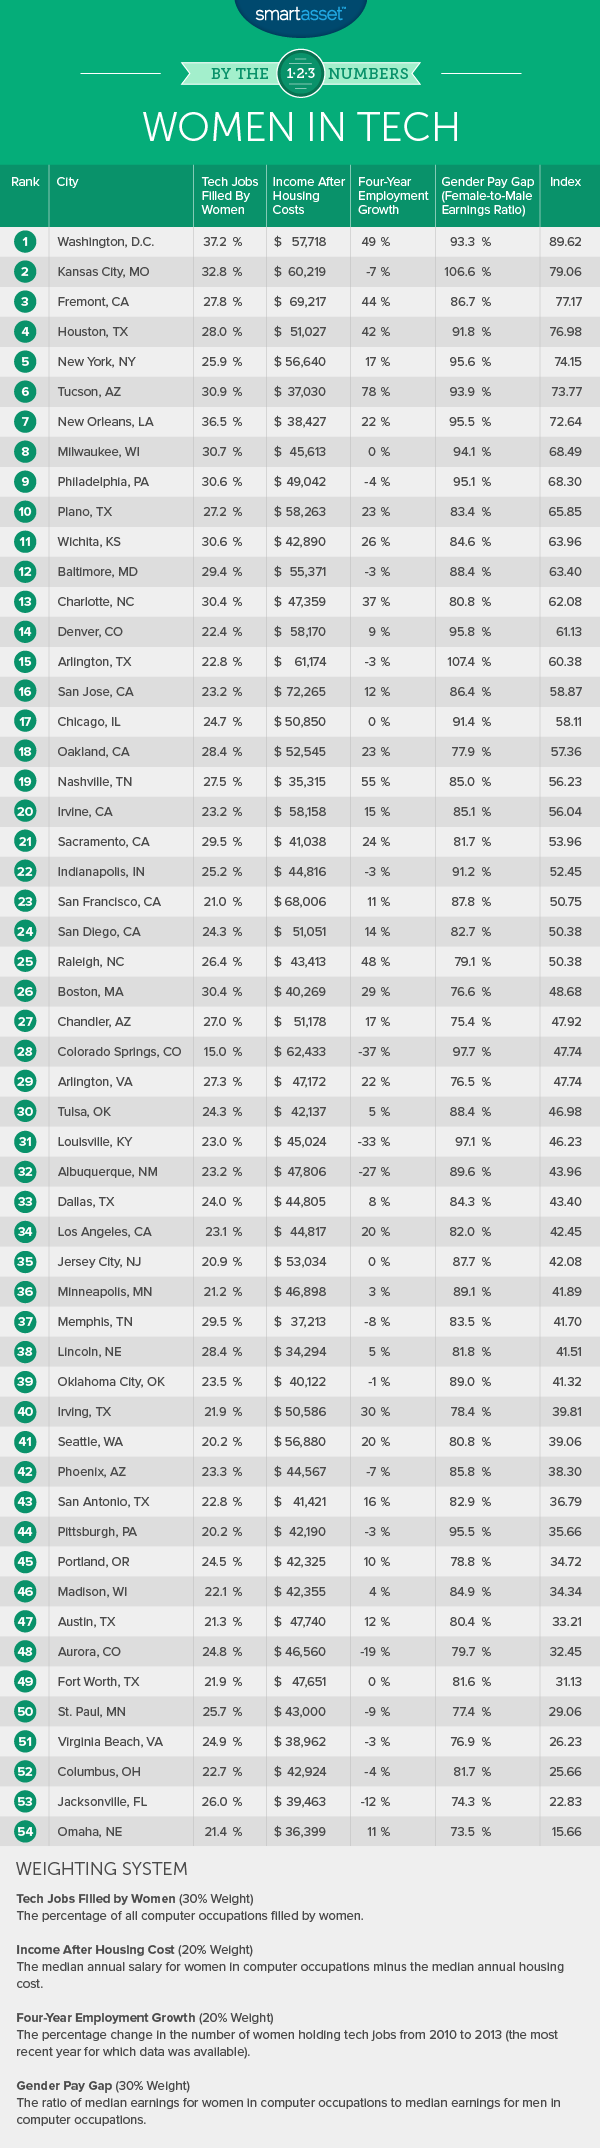 The Best Cities for Women in Tech in 2015